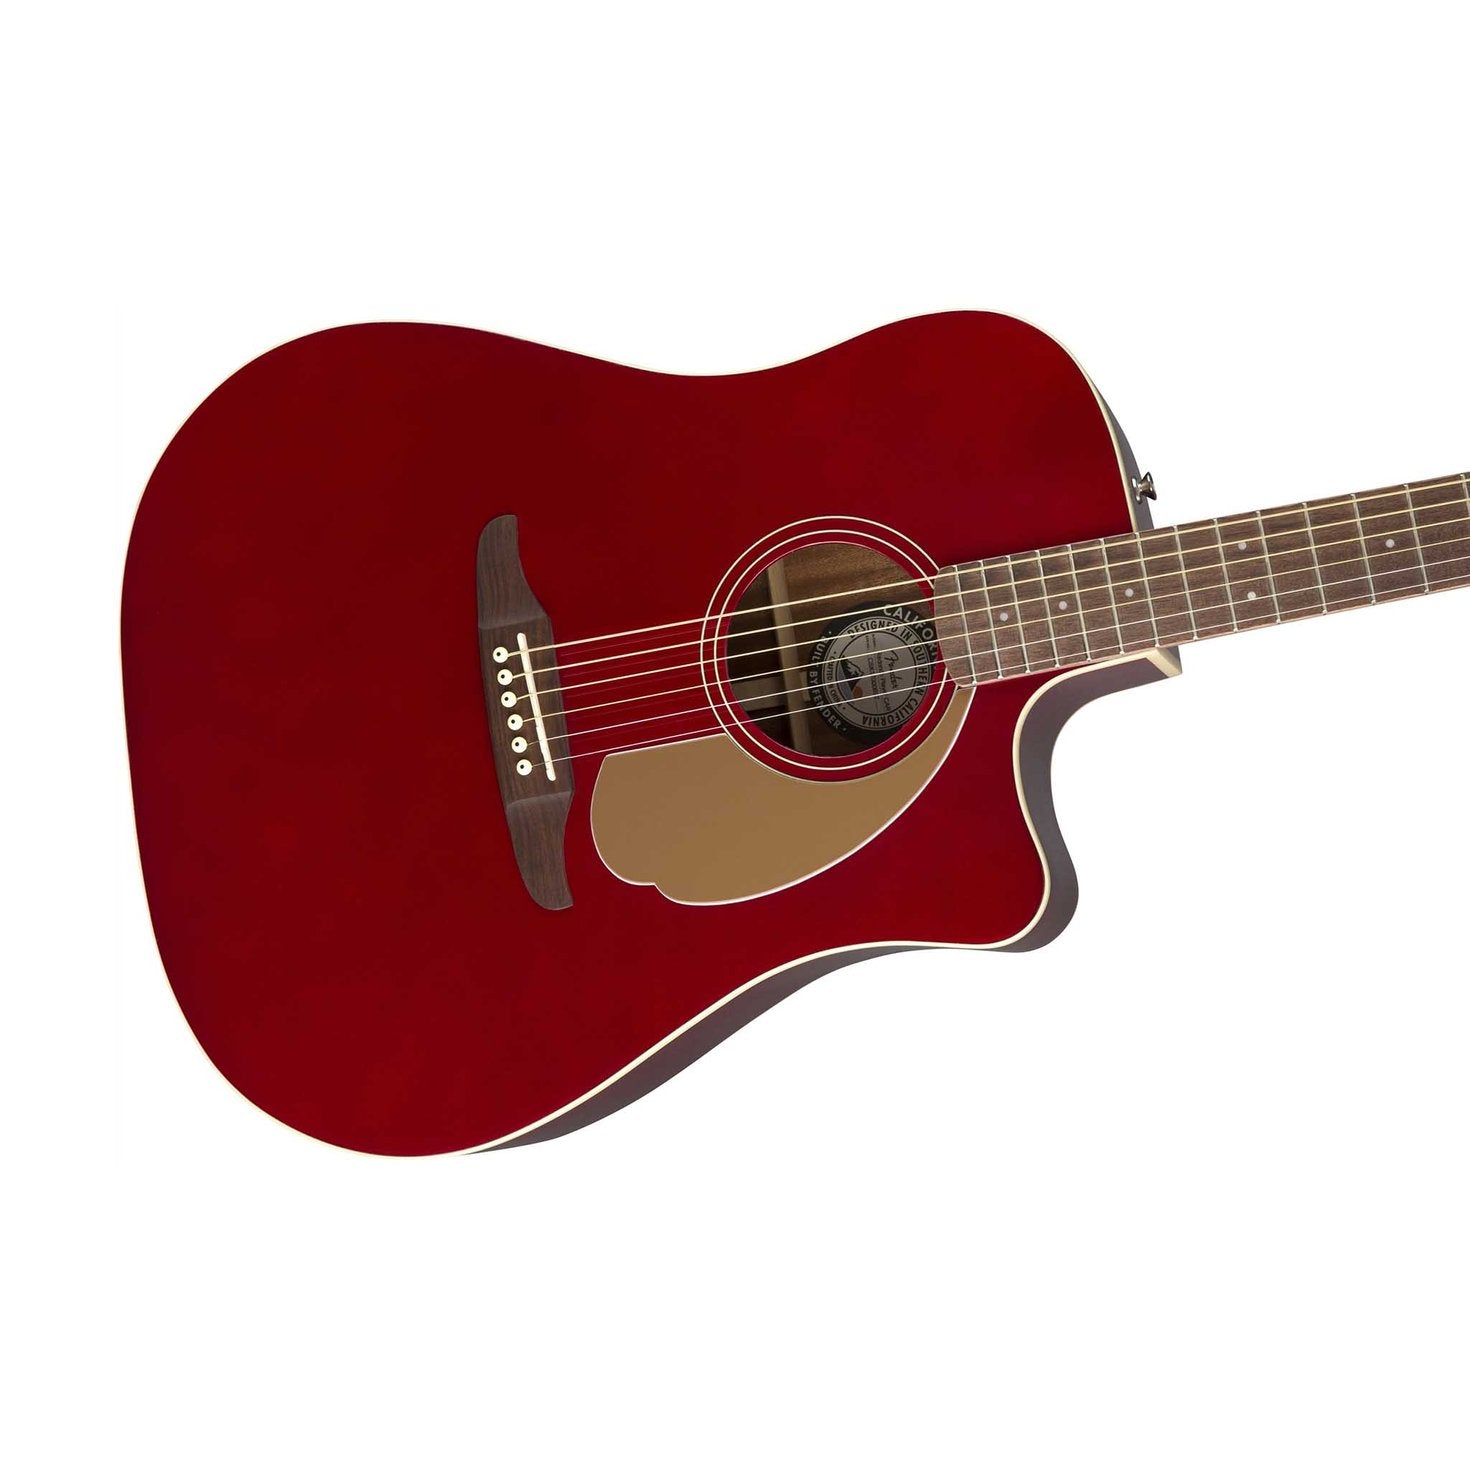 Fender Redondo Player Slope-Shouldered Acoustic Guitar, Candy Apple Red, FENDER, ACOUSTIC GUITAR, fender-acoustic-guitar-f03-097-0713-509, ZOSO MUSIC SDN BHD